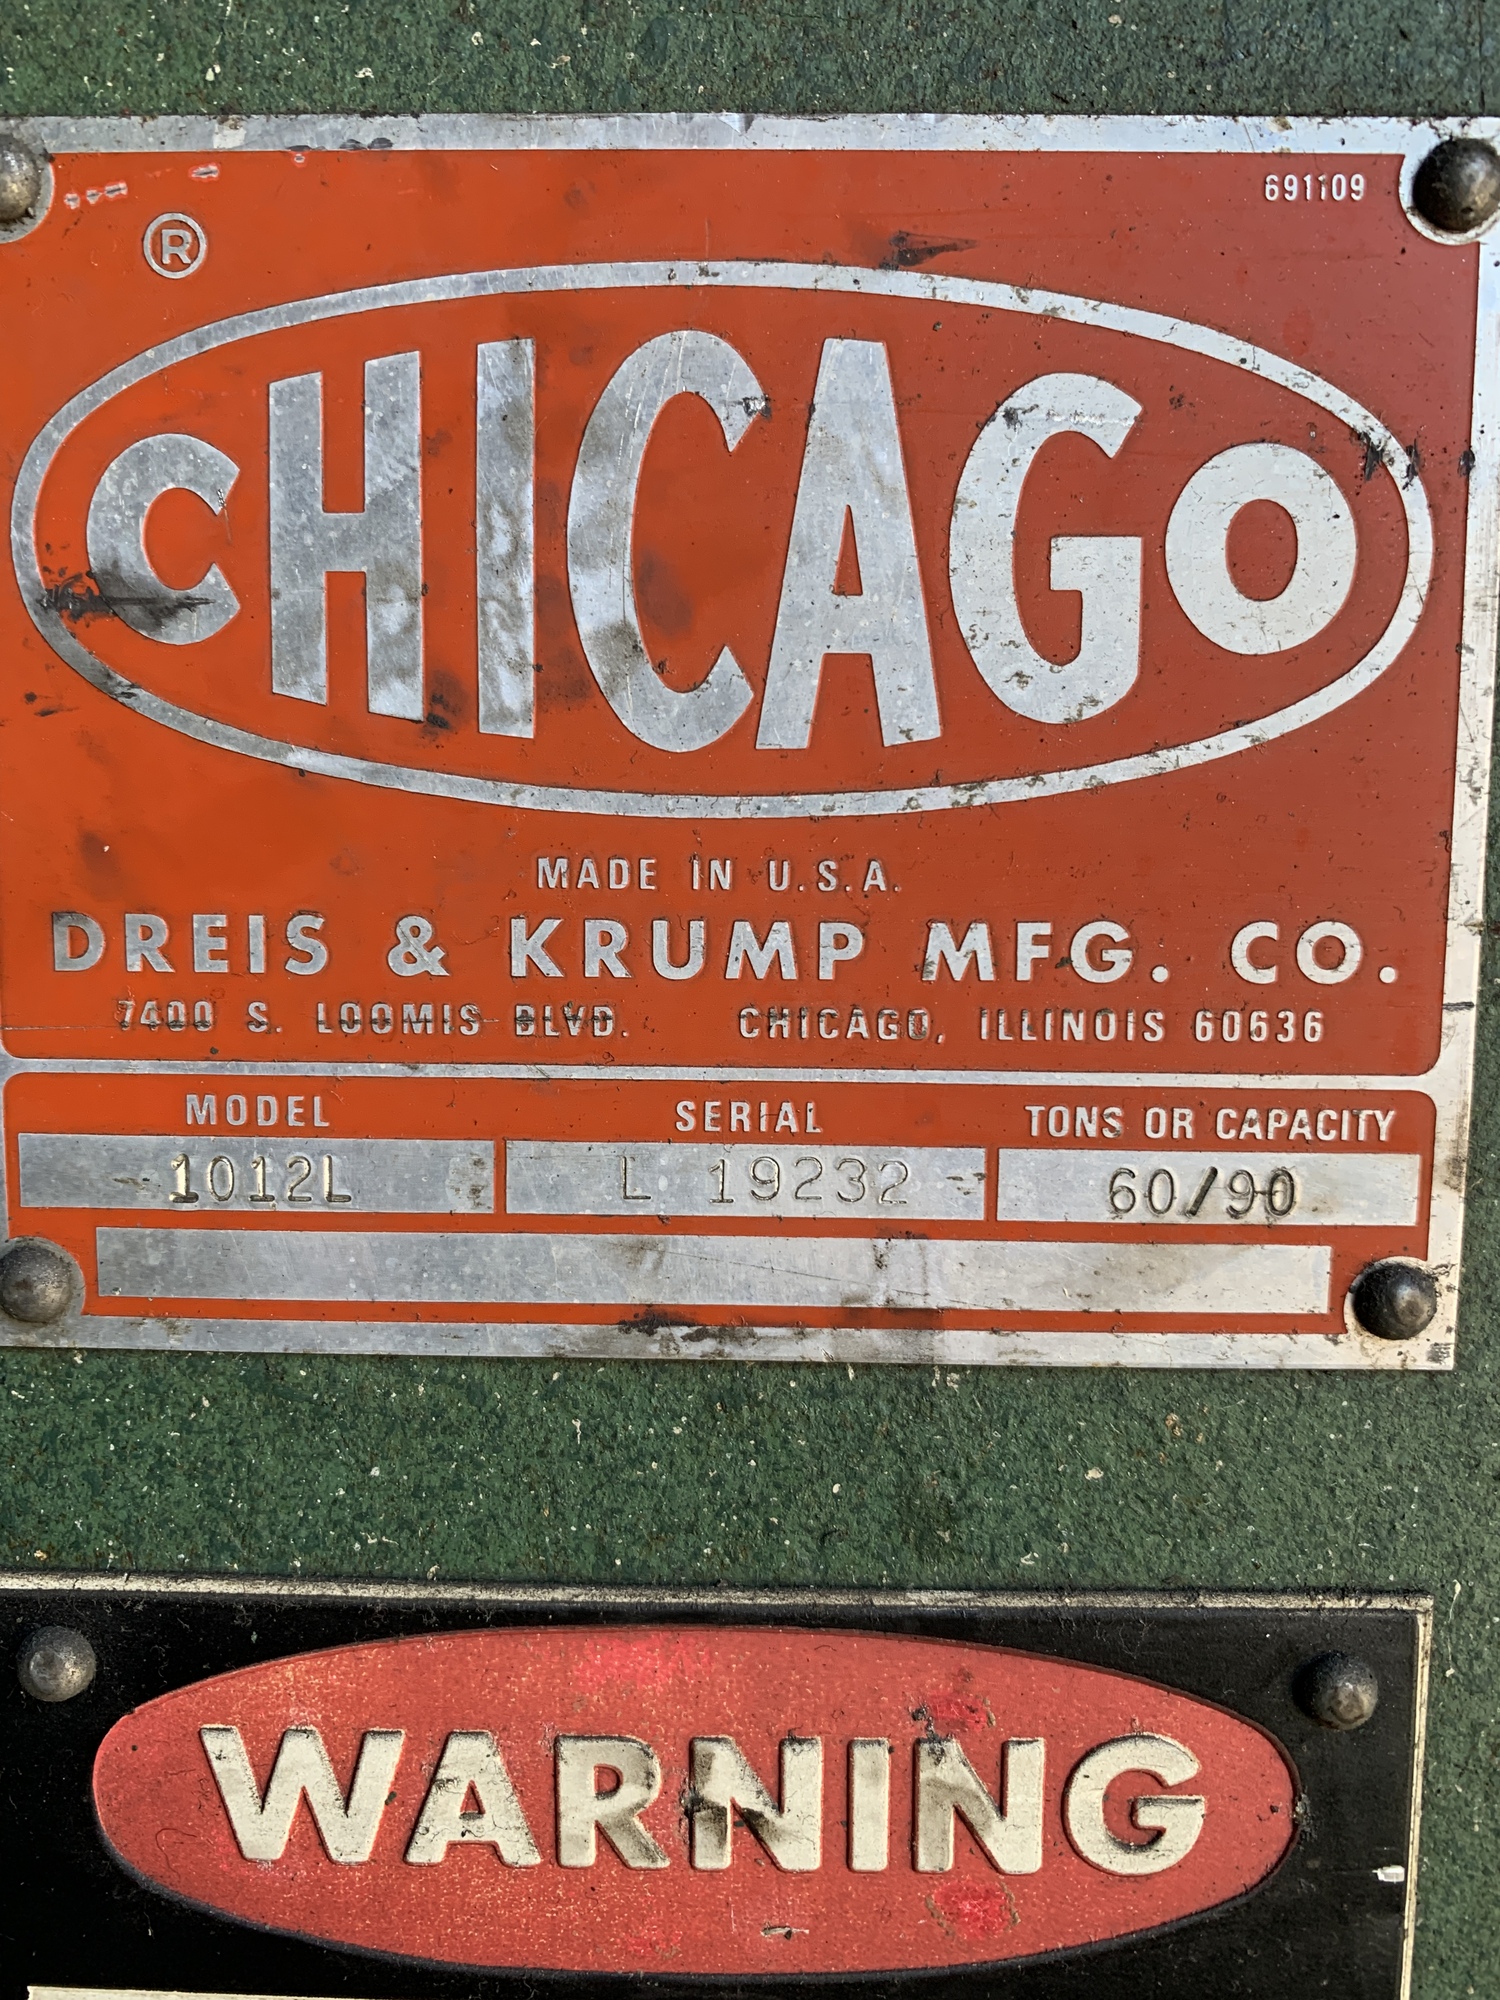 1972 CHICAGO DREIS & KRUMP 1012-L Press Brakes | RELCO MACHINERY